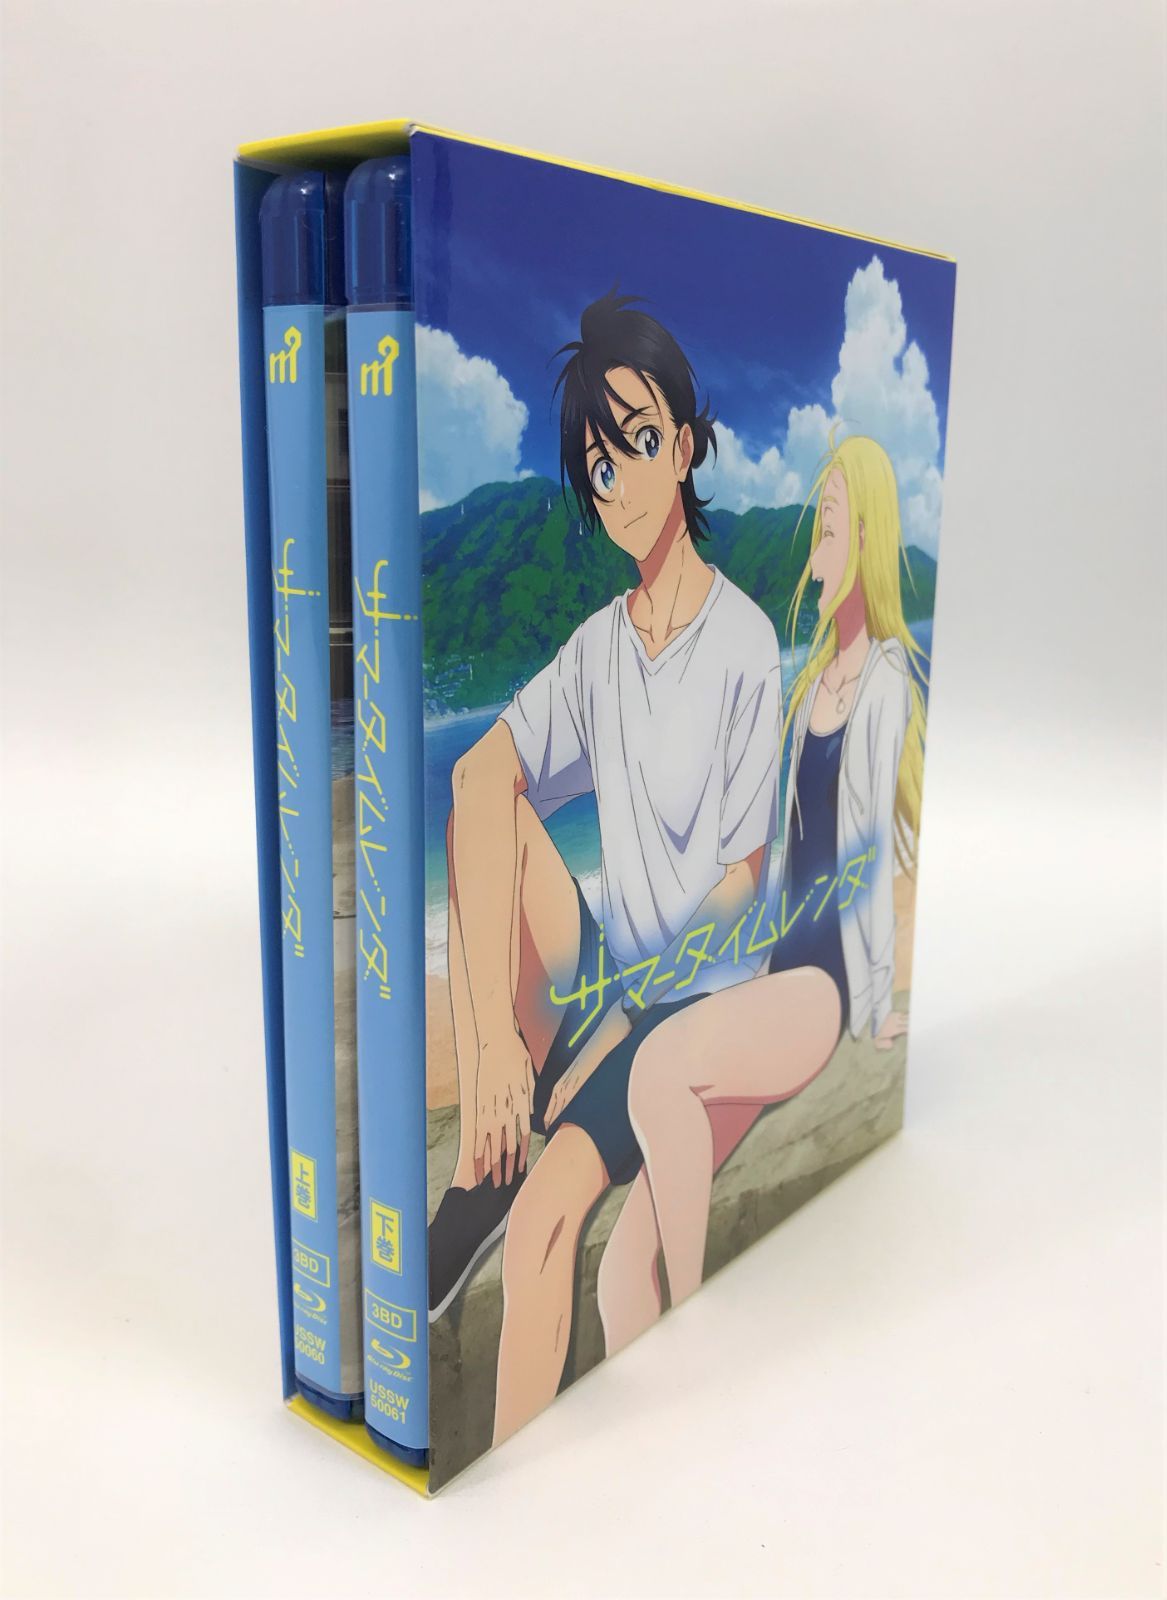 TVアニメ『サマータイムレンダ』 Blu-ray 下巻(Blu-ray Disc) - ブルーレイ